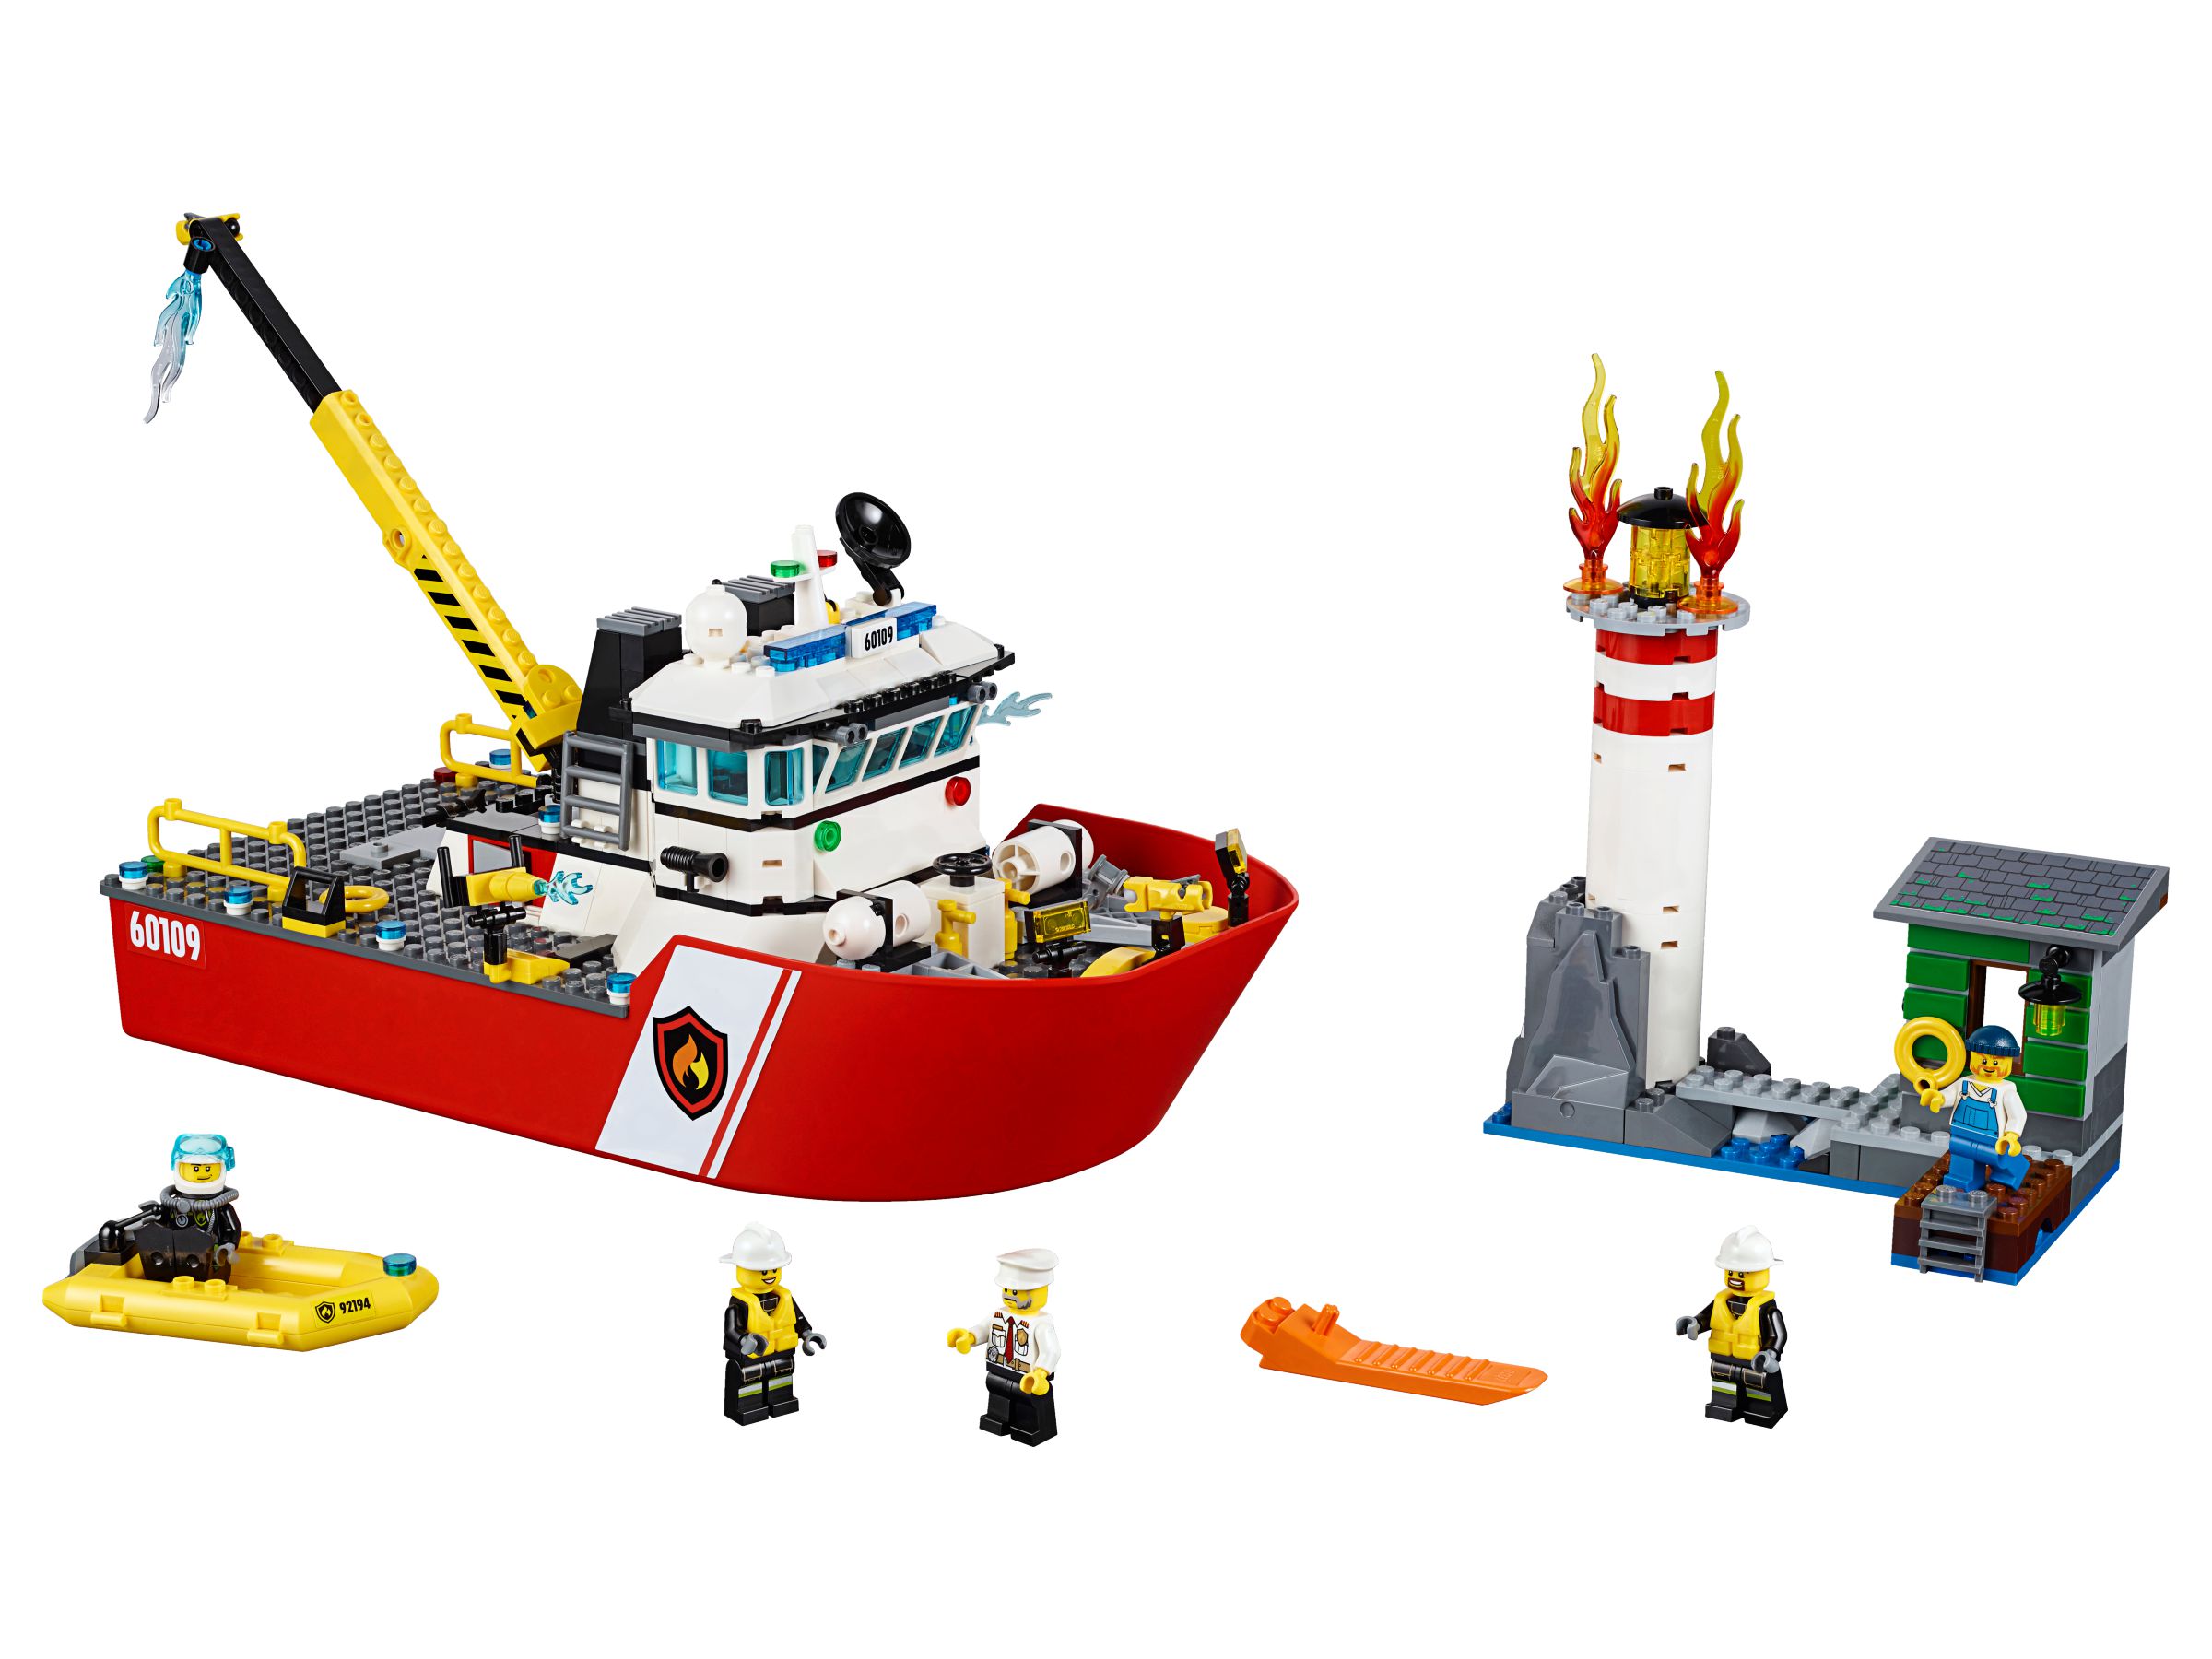 LEGO City 60109 Feuerwehrschiff